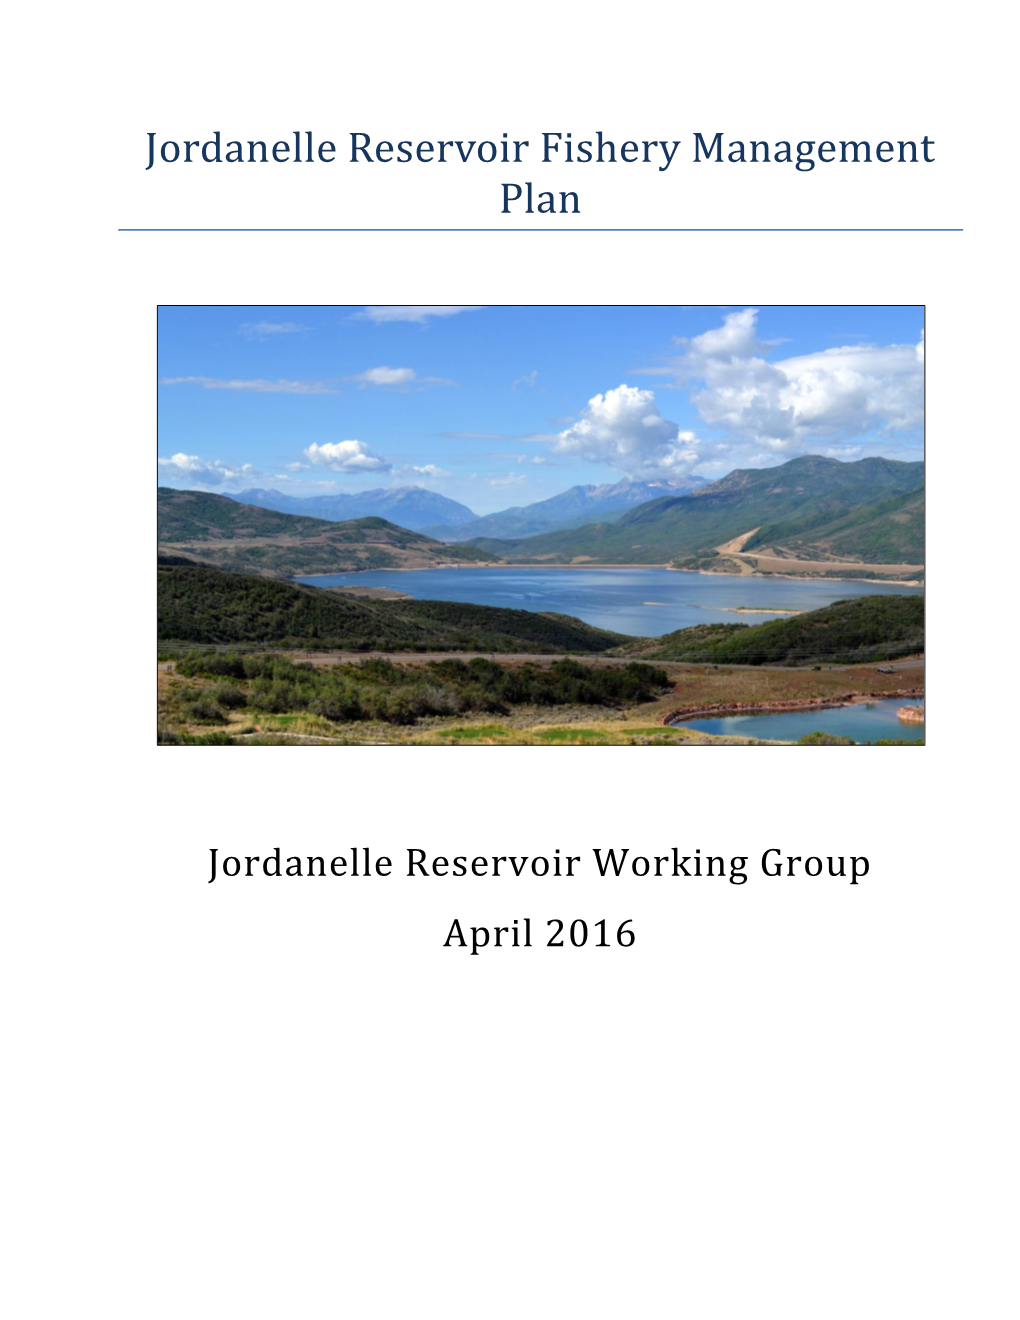 Jordanelle Reservoir Fishery Management Plan